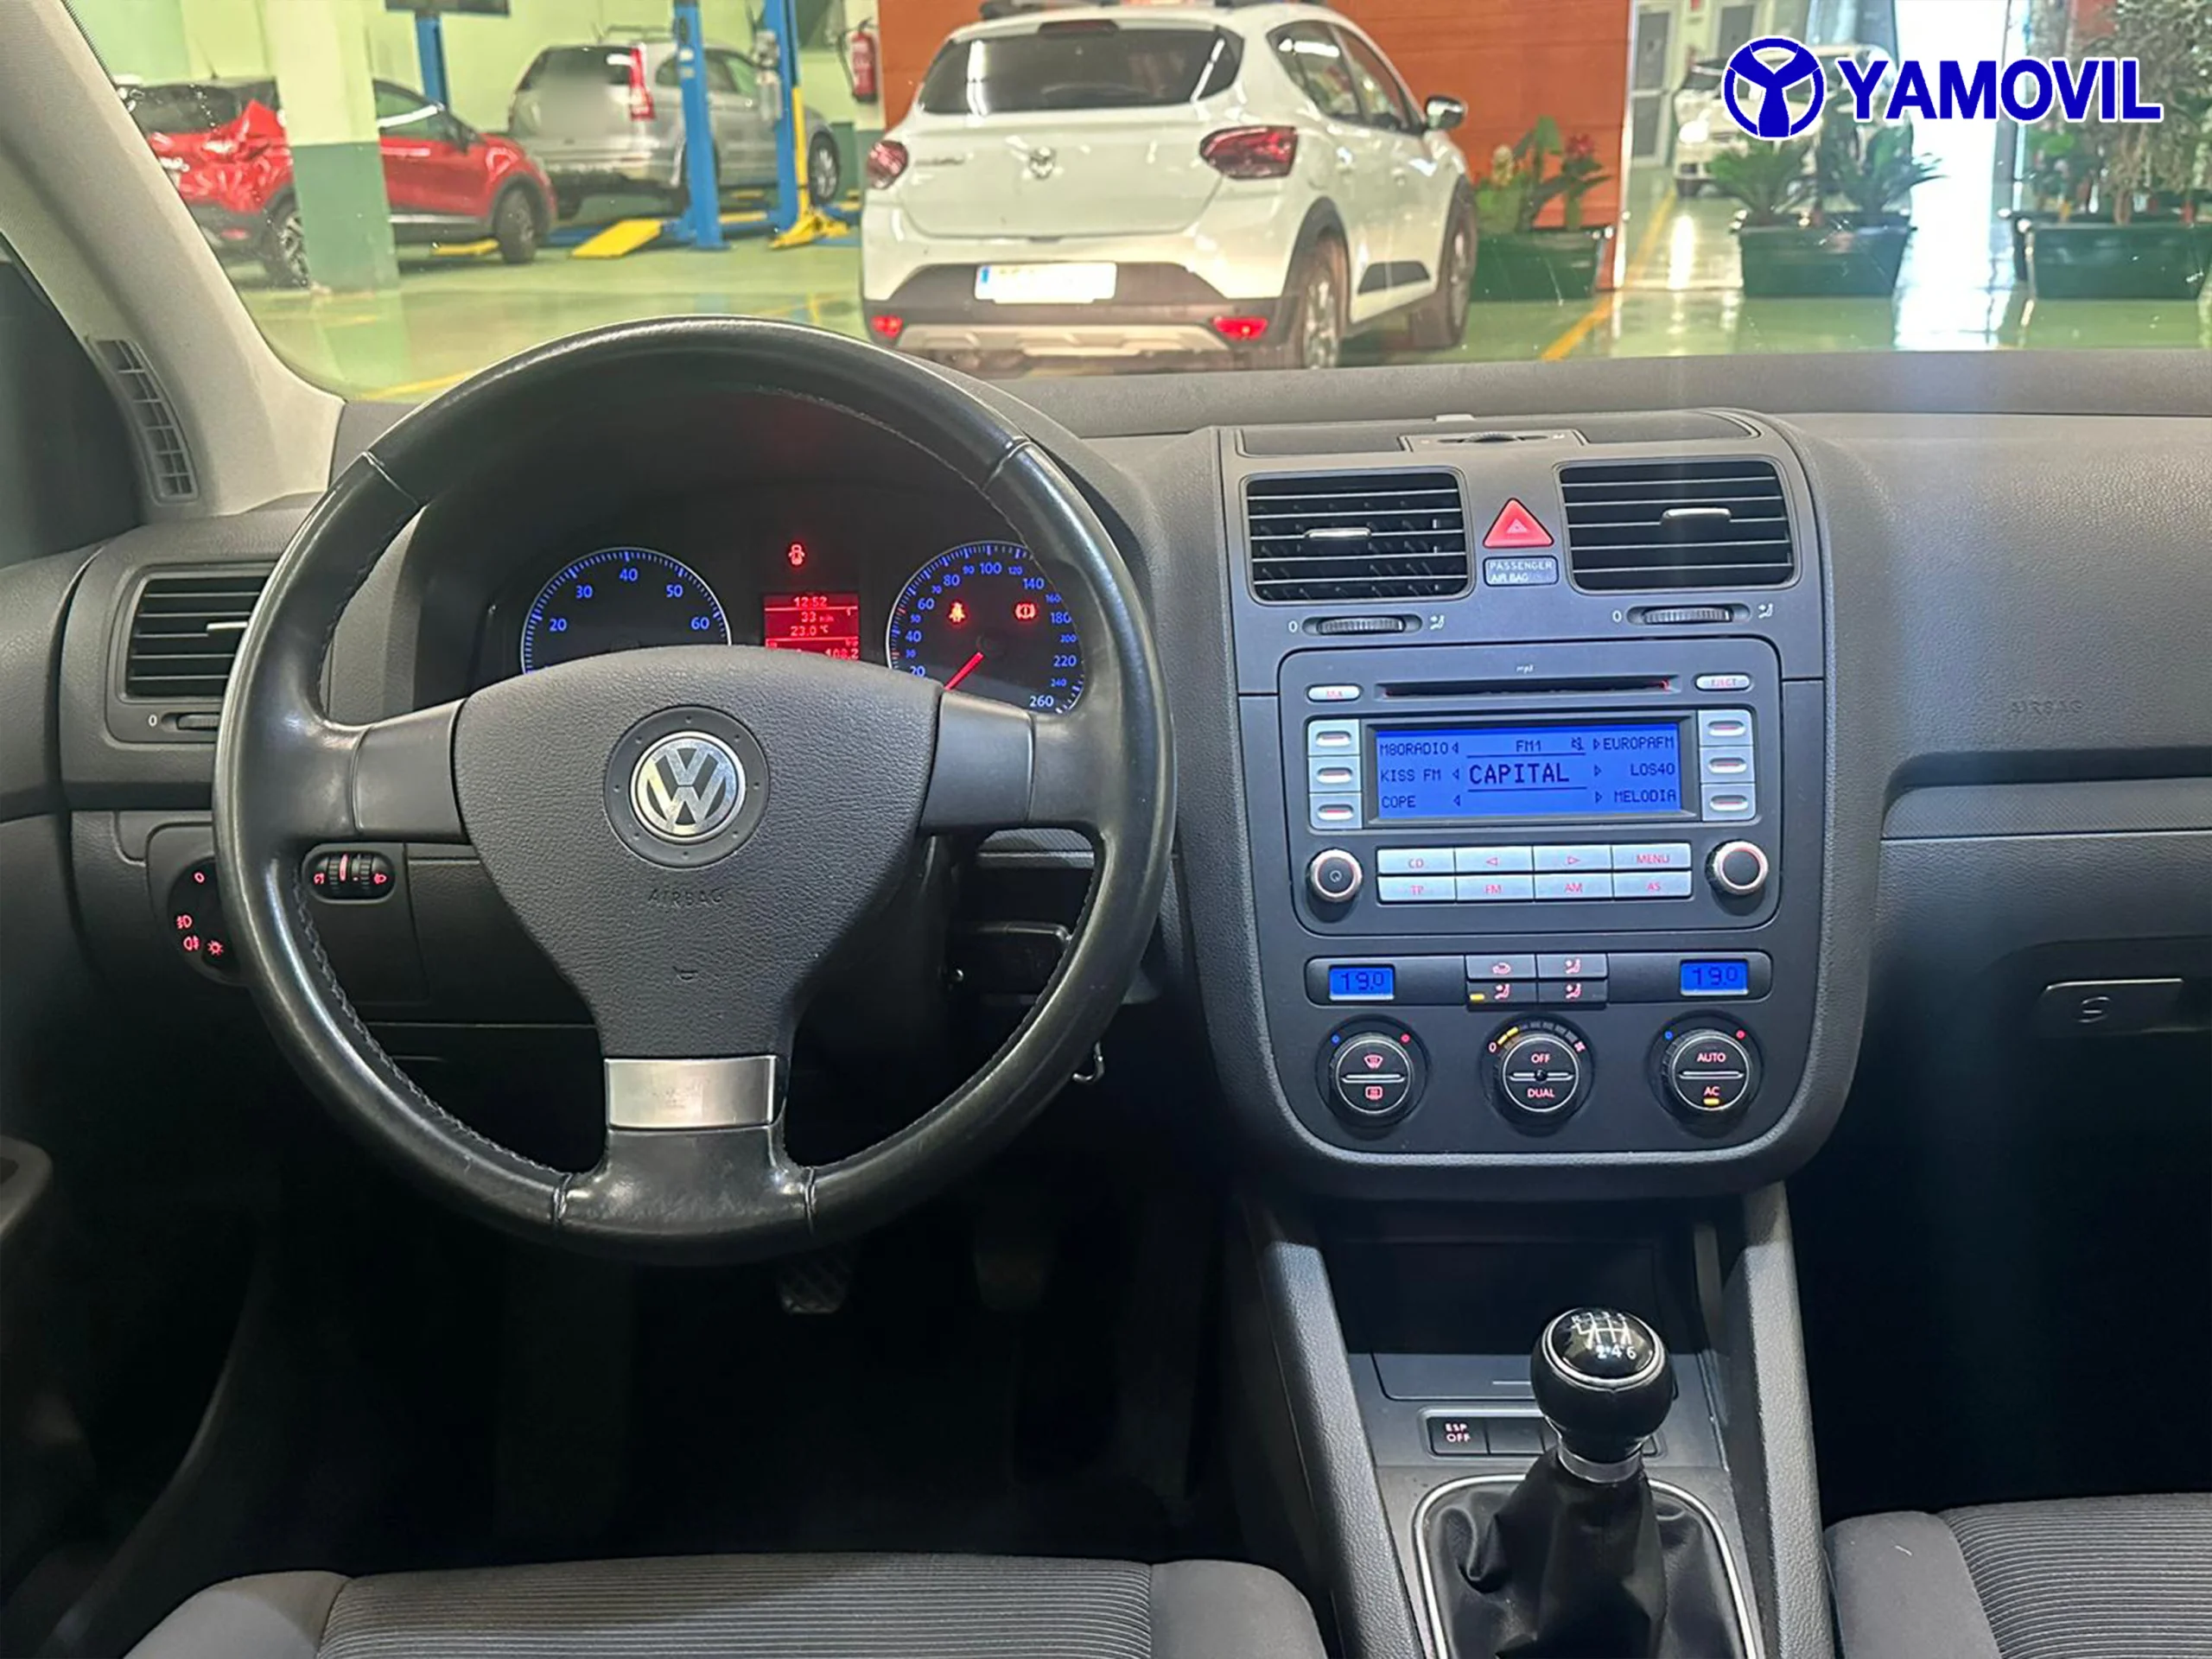 Volkswagen Golf iGolf 1.4 TSI 90 kW (122 CV) - Foto 5